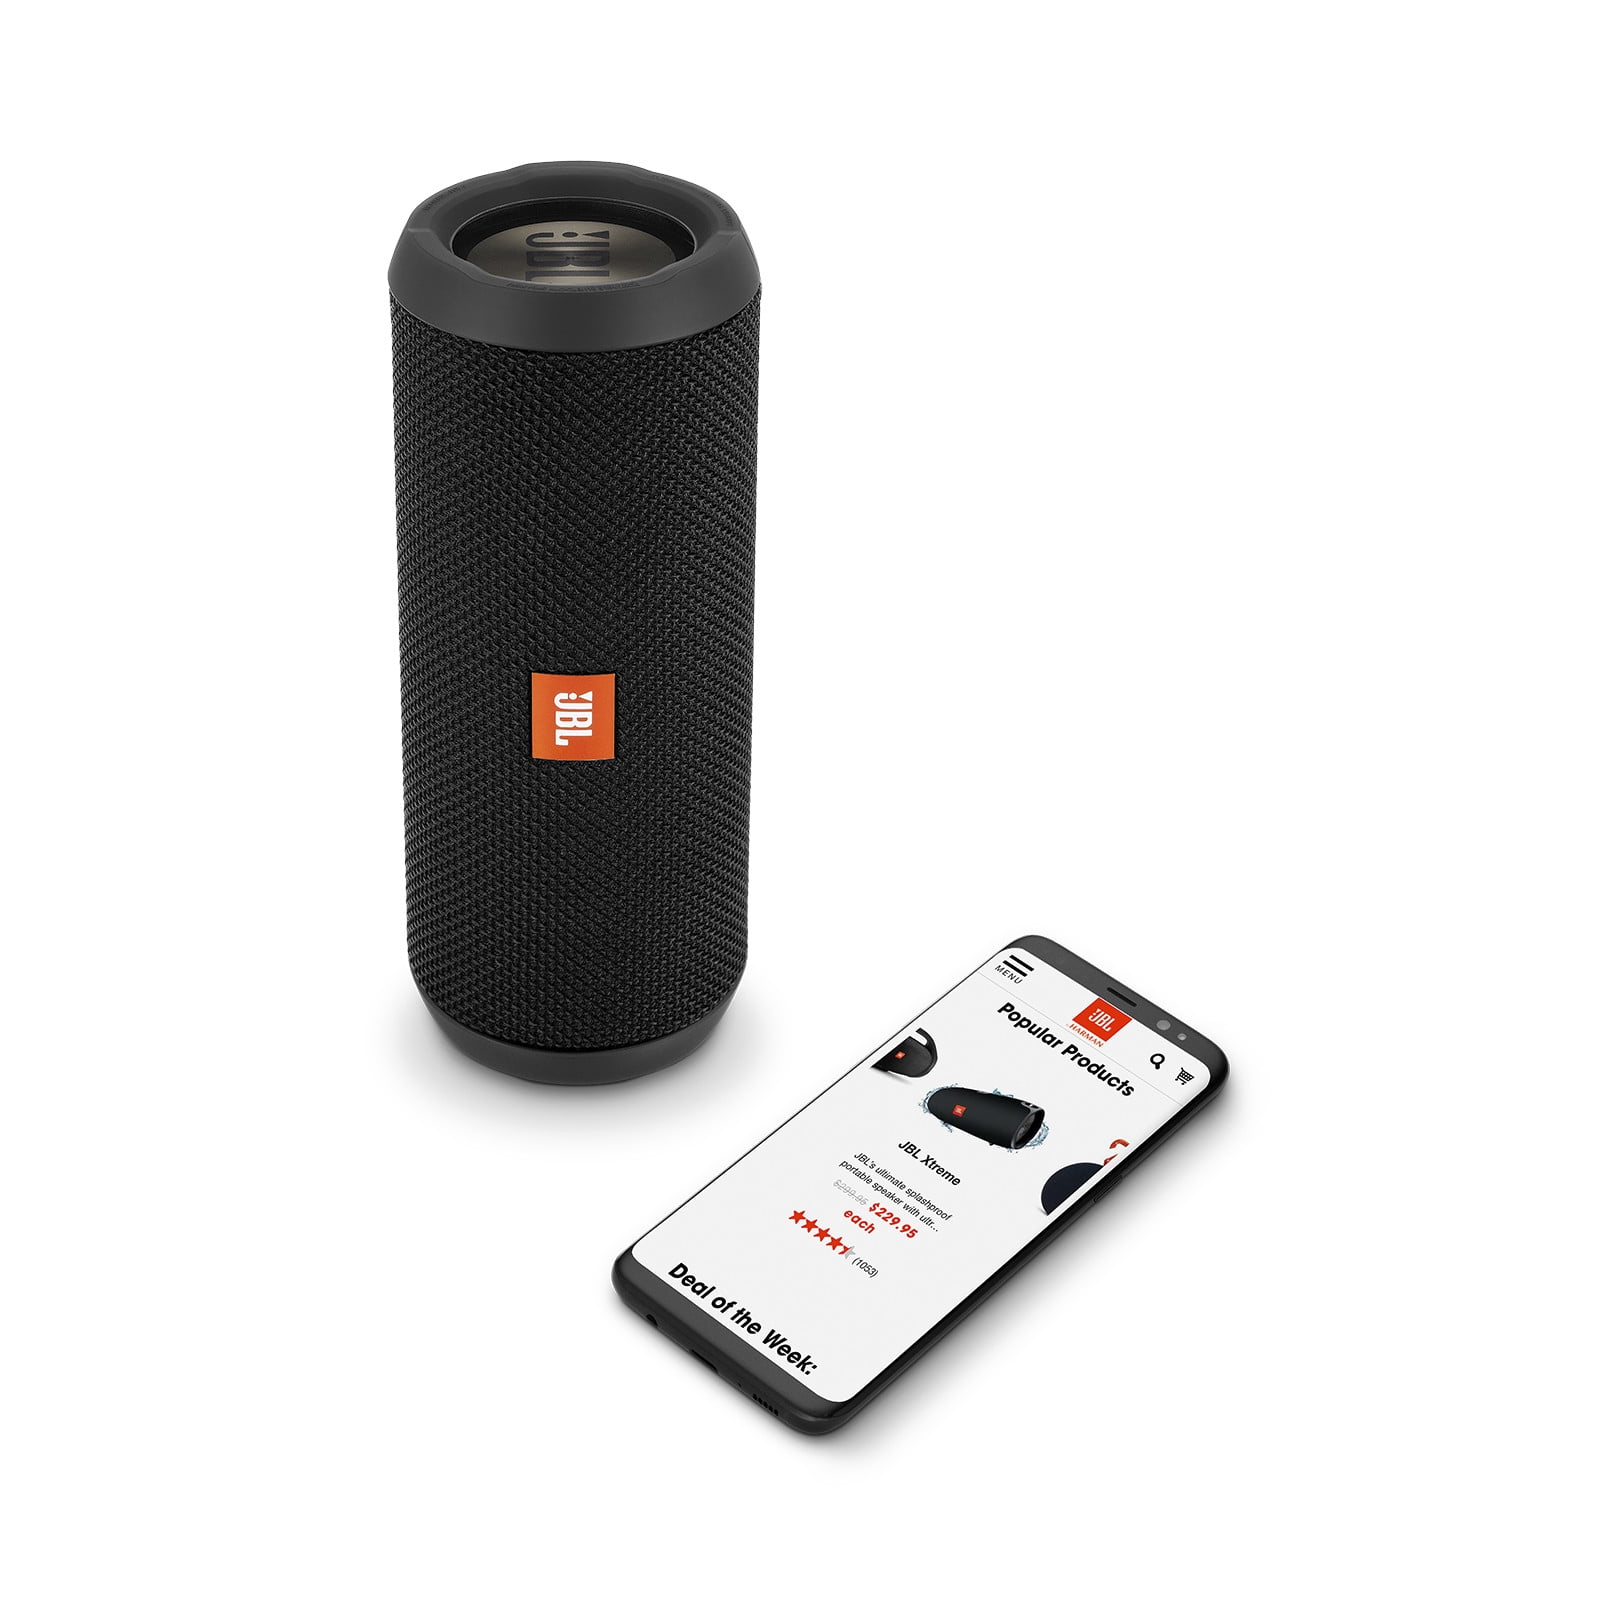 Precaución Circunstancias imprevistas luces JBL Flip 3 Stealth Portable Bluetooth Speaker, Black - Walmart.com